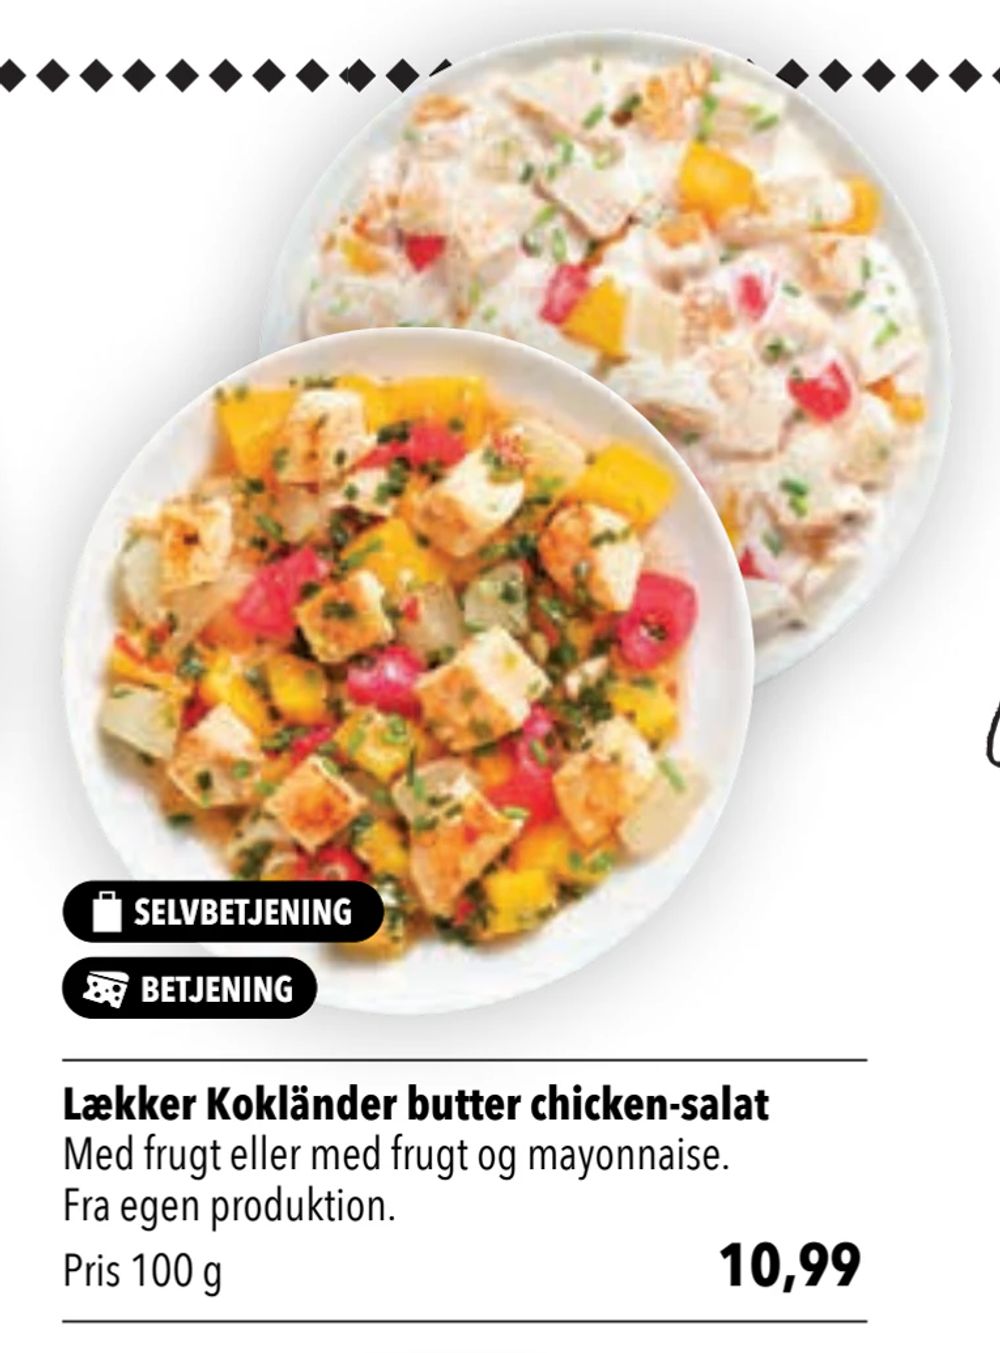 Tilbud på Lækker Kokländer butter chicken-salat fra CITTI til 10,99 kr.